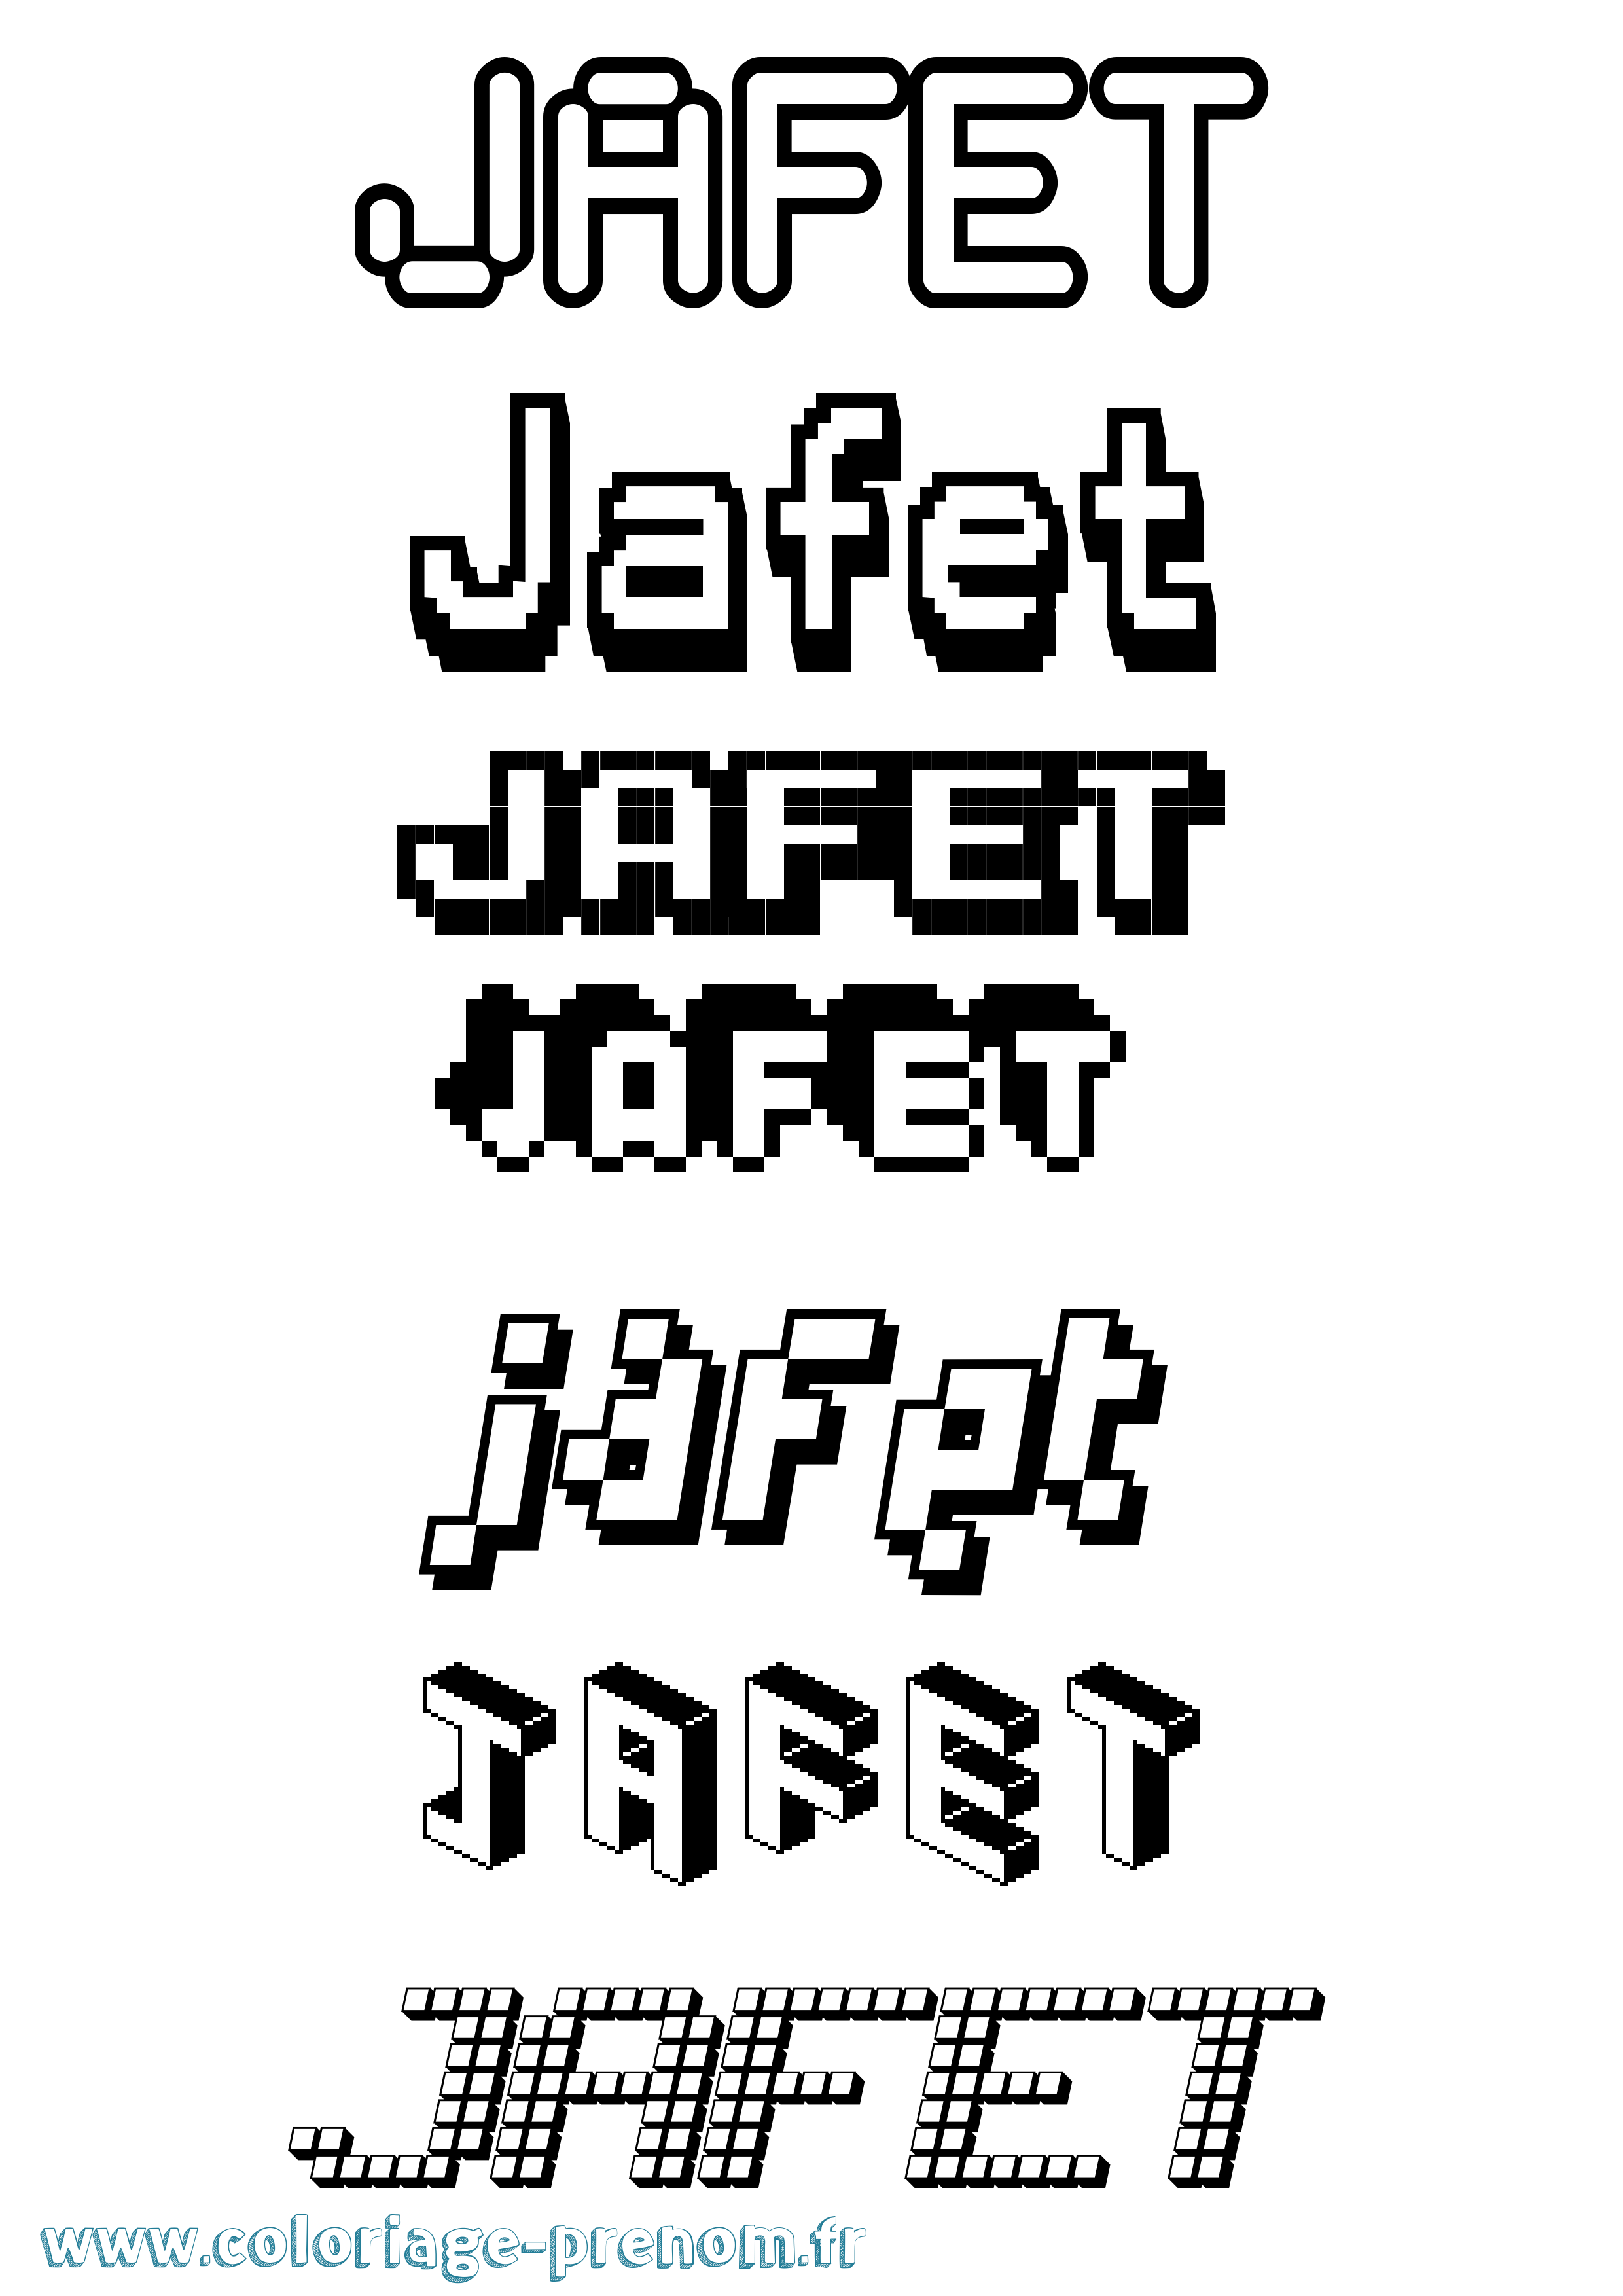 Coloriage prénom Jafet Pixel